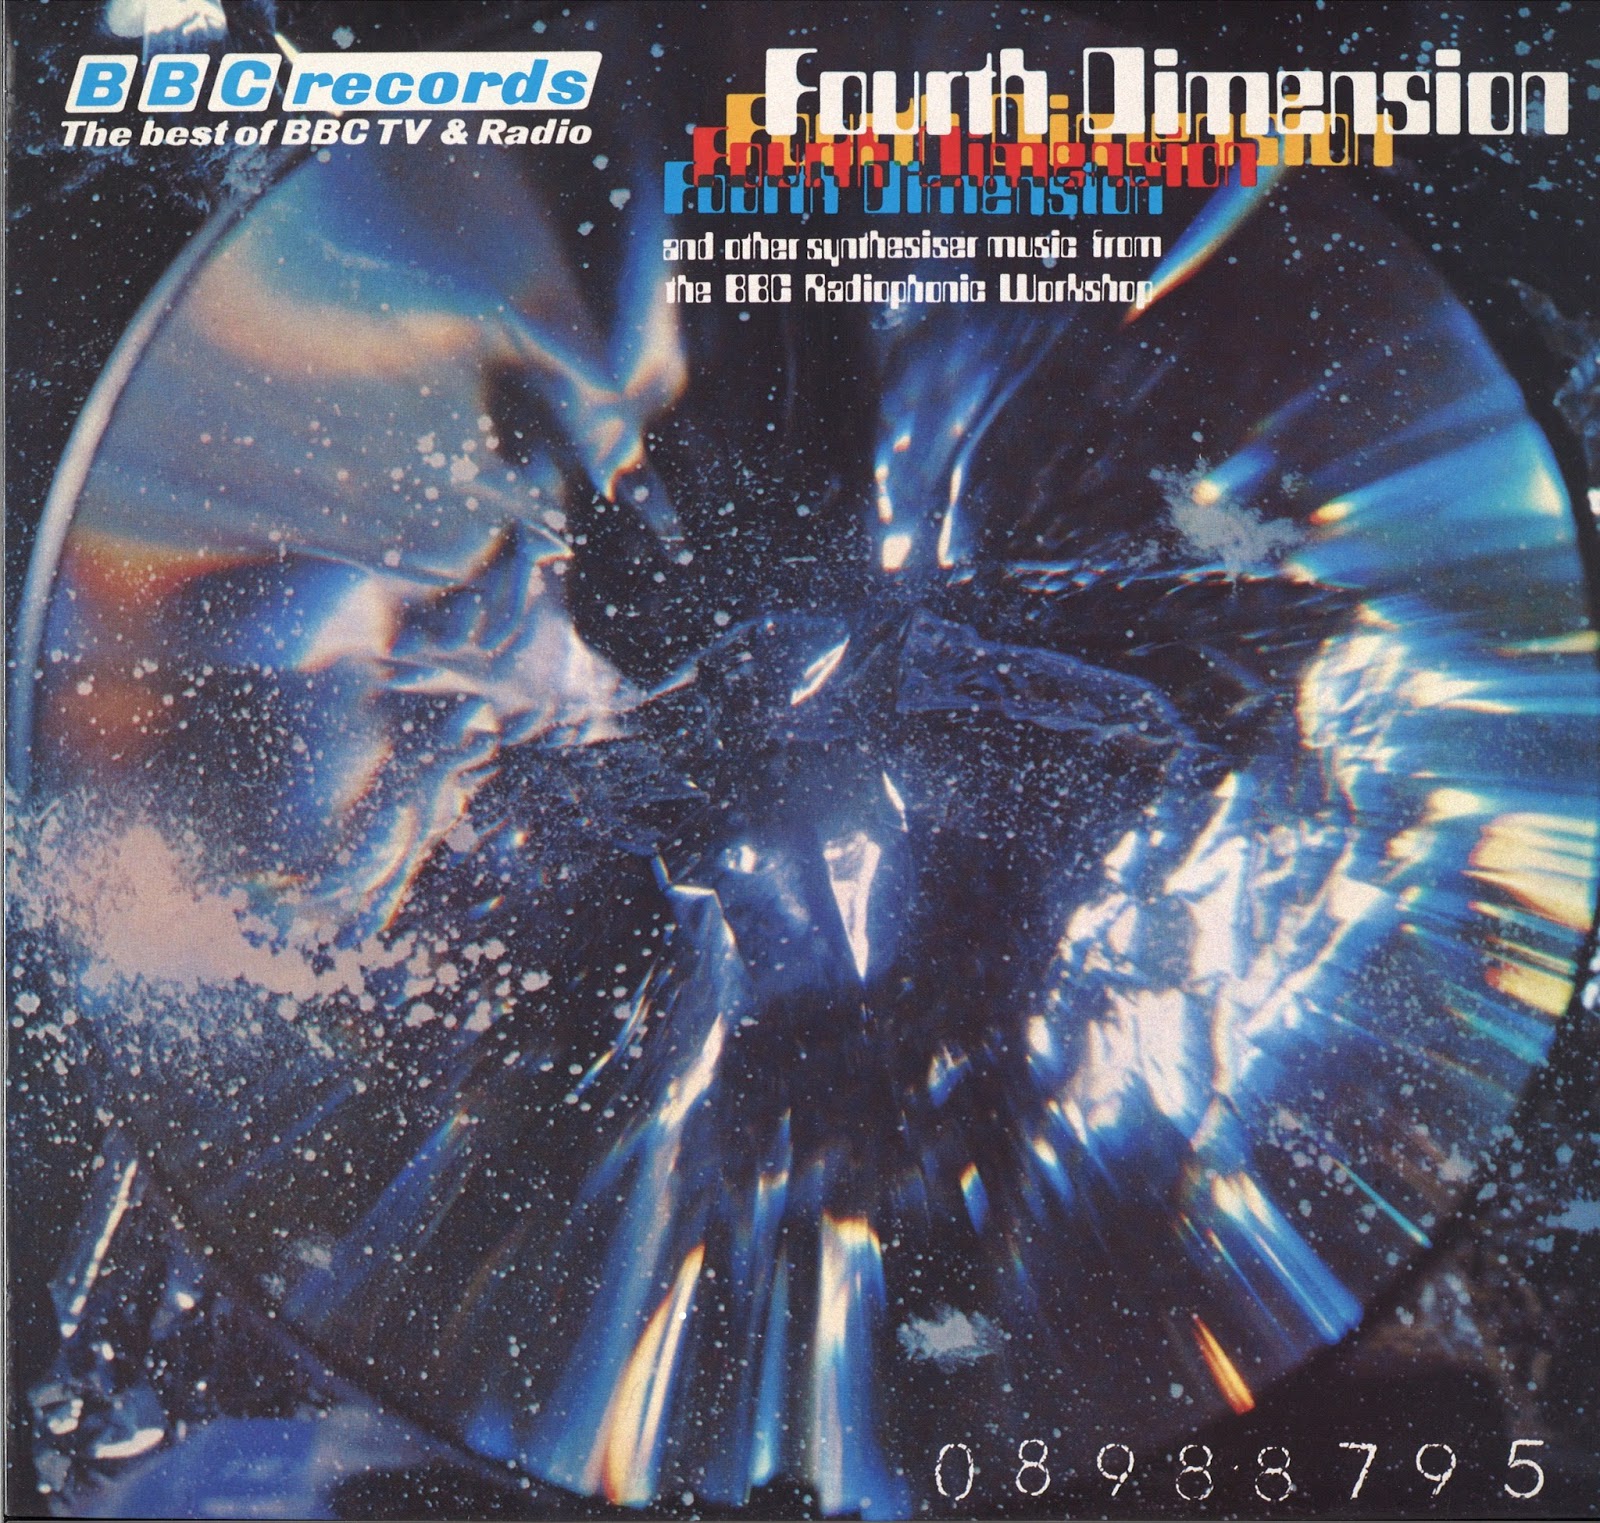 In-Flight Entertainment: BBC Radiophonic Workshop - Fourth Dimension (1973)